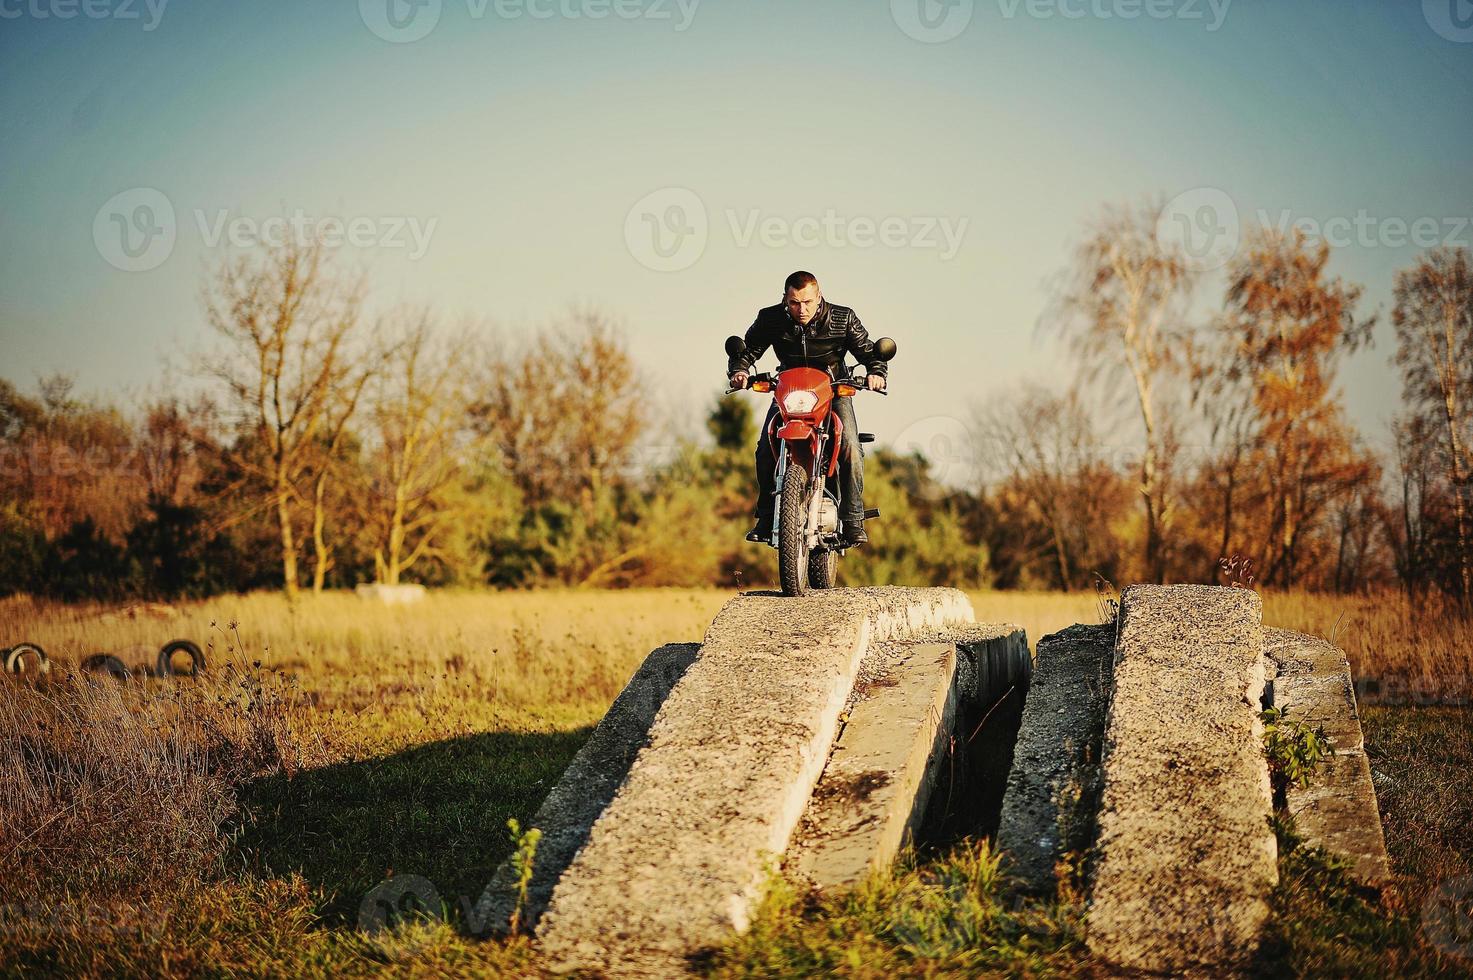 corredor de enduro sentado en su motocicleta foto